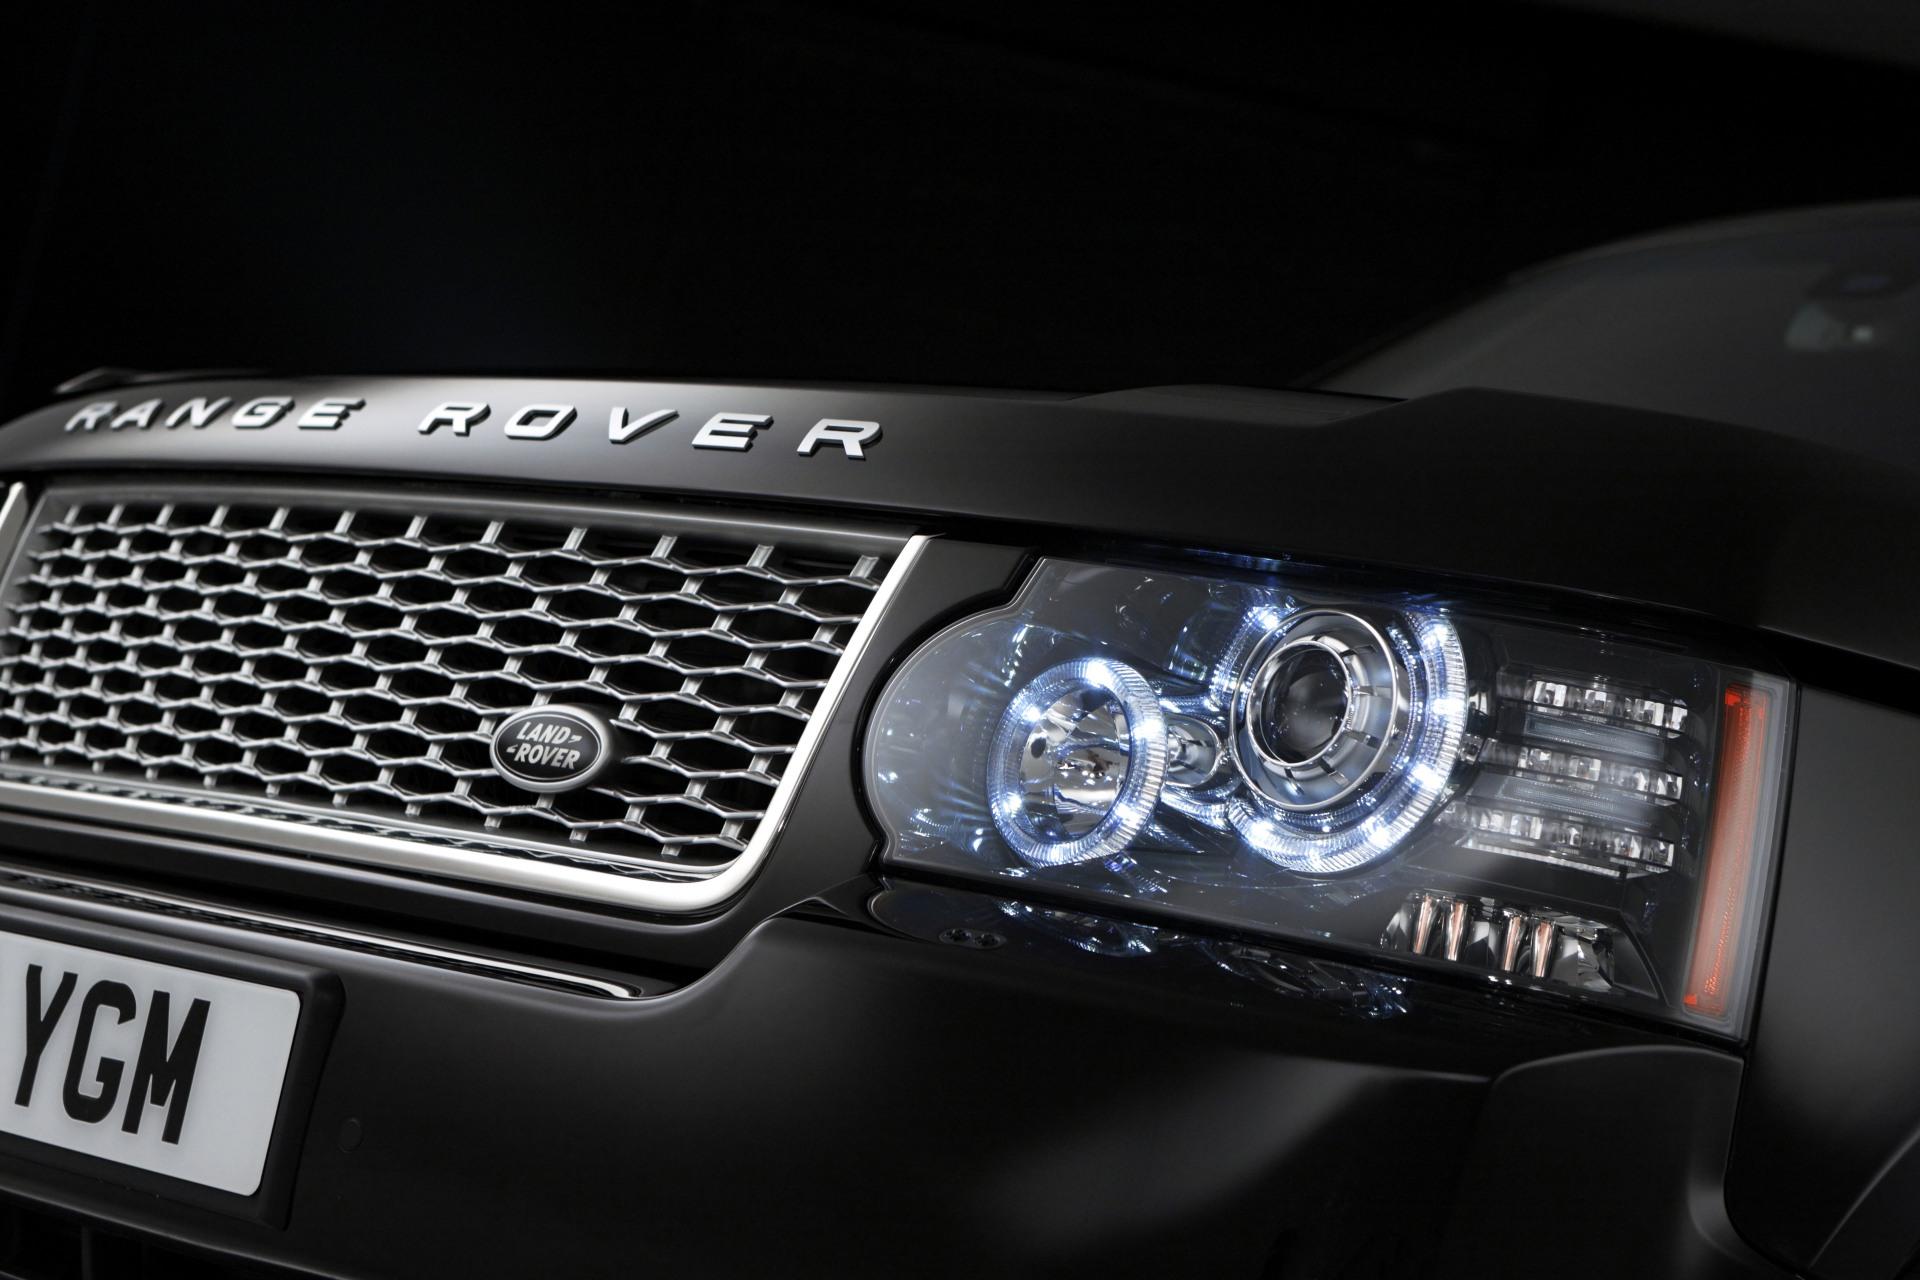 2011 Land Rover Range Rover Autobiography Black Edition